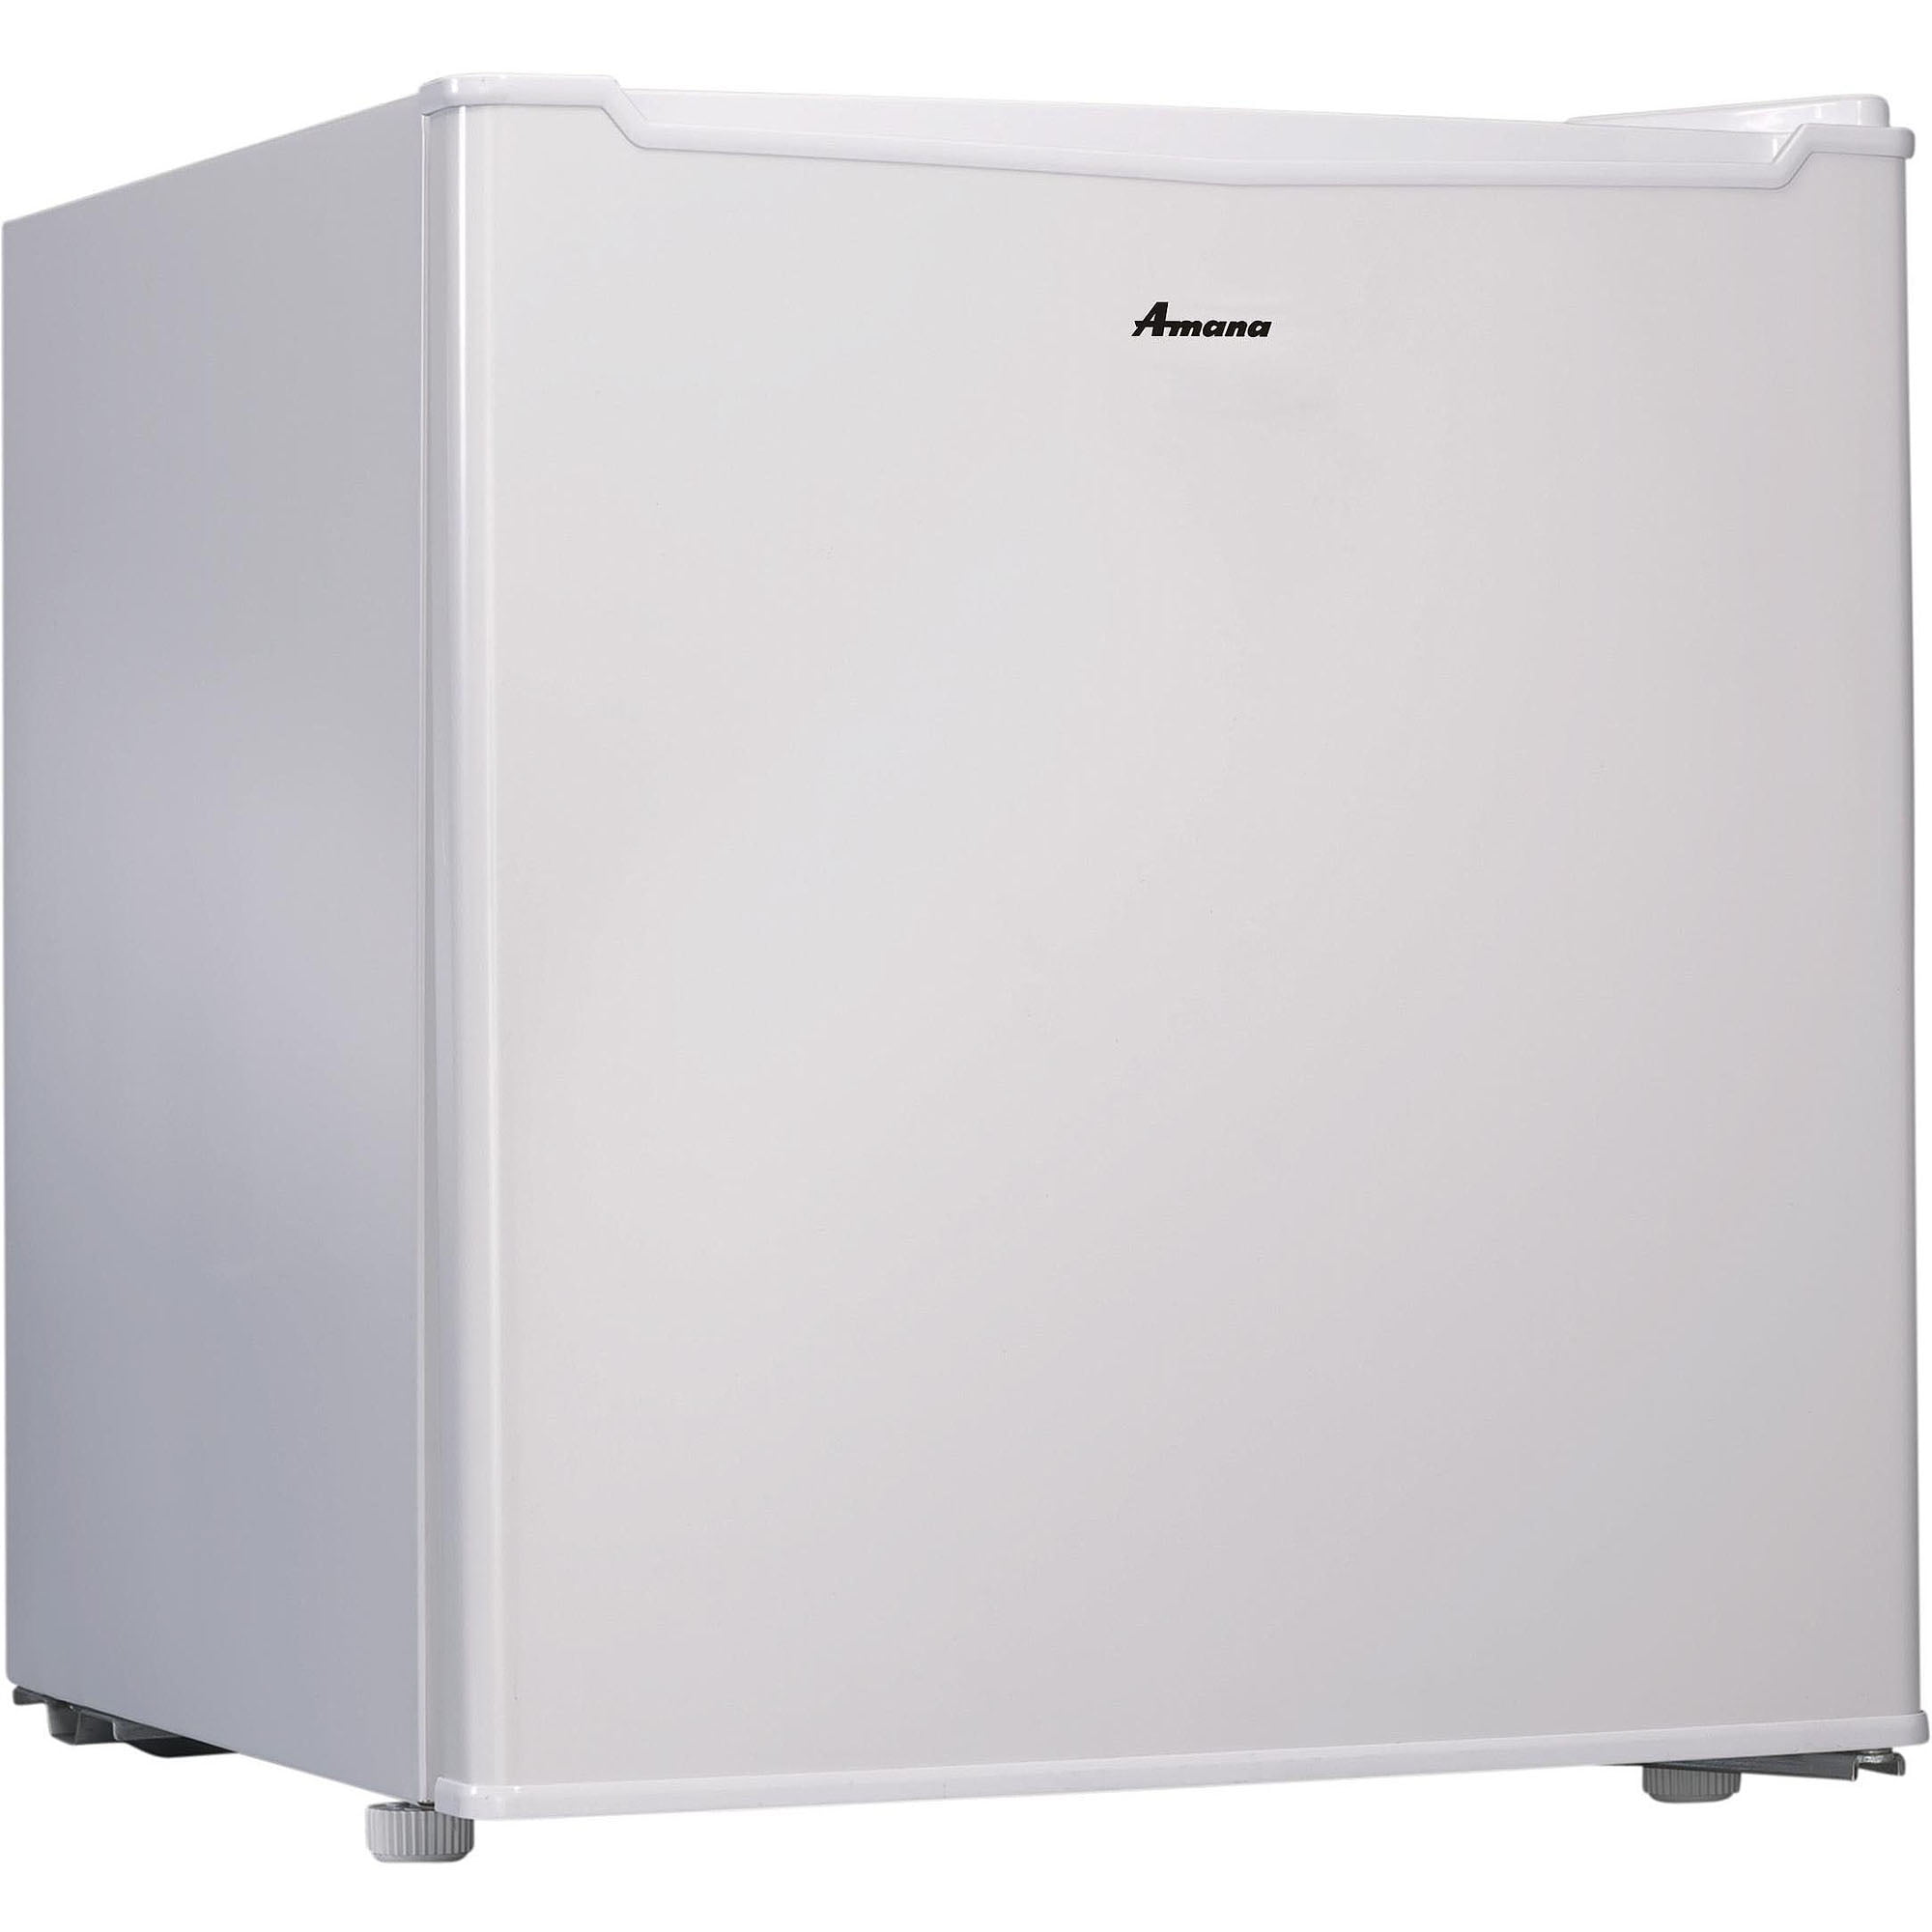 AMAR31TS1E by Amana - Dual Door Mini Refrigerator